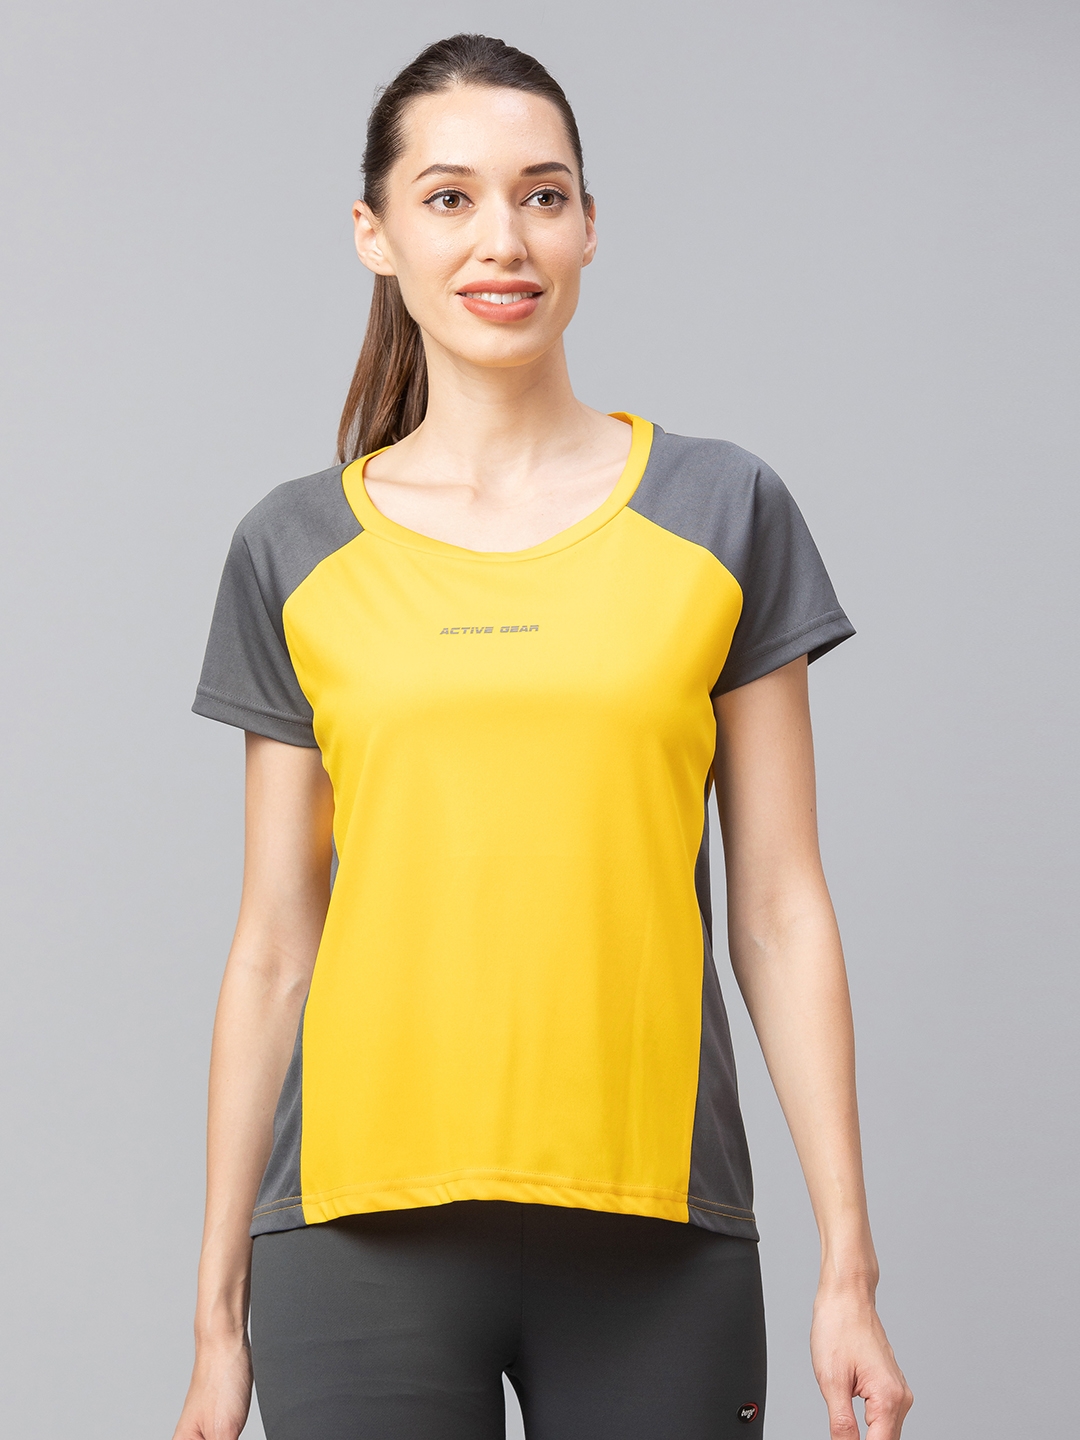 globus | Globus Yellow Colourblocked Tshirt 0